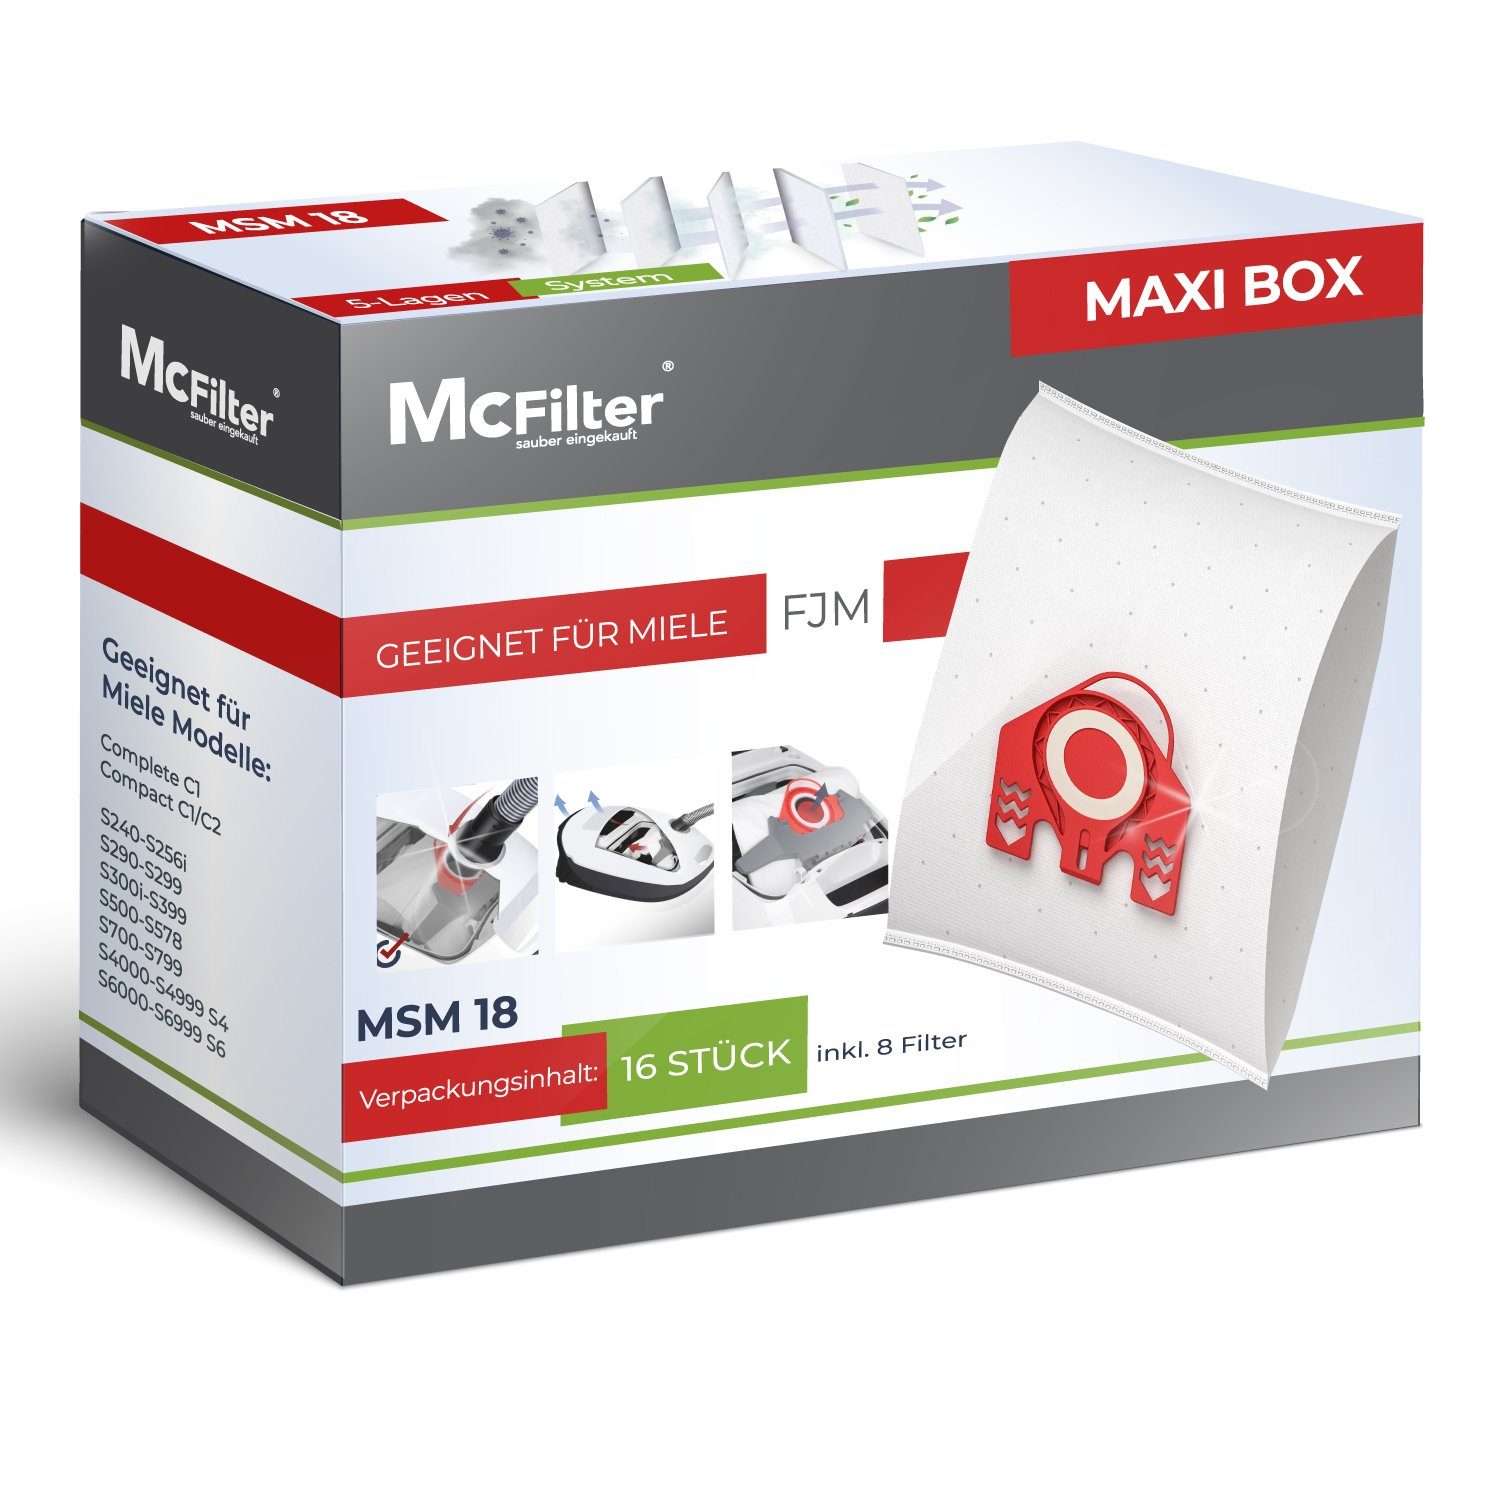 McFilter Staubsaugerbeutel MAXI BOX 16+8, passend für Miele Plus S381, S771, inkl. 8 Filter, 16 St., Top Miele Alternative zu 9917710, wie 10408420